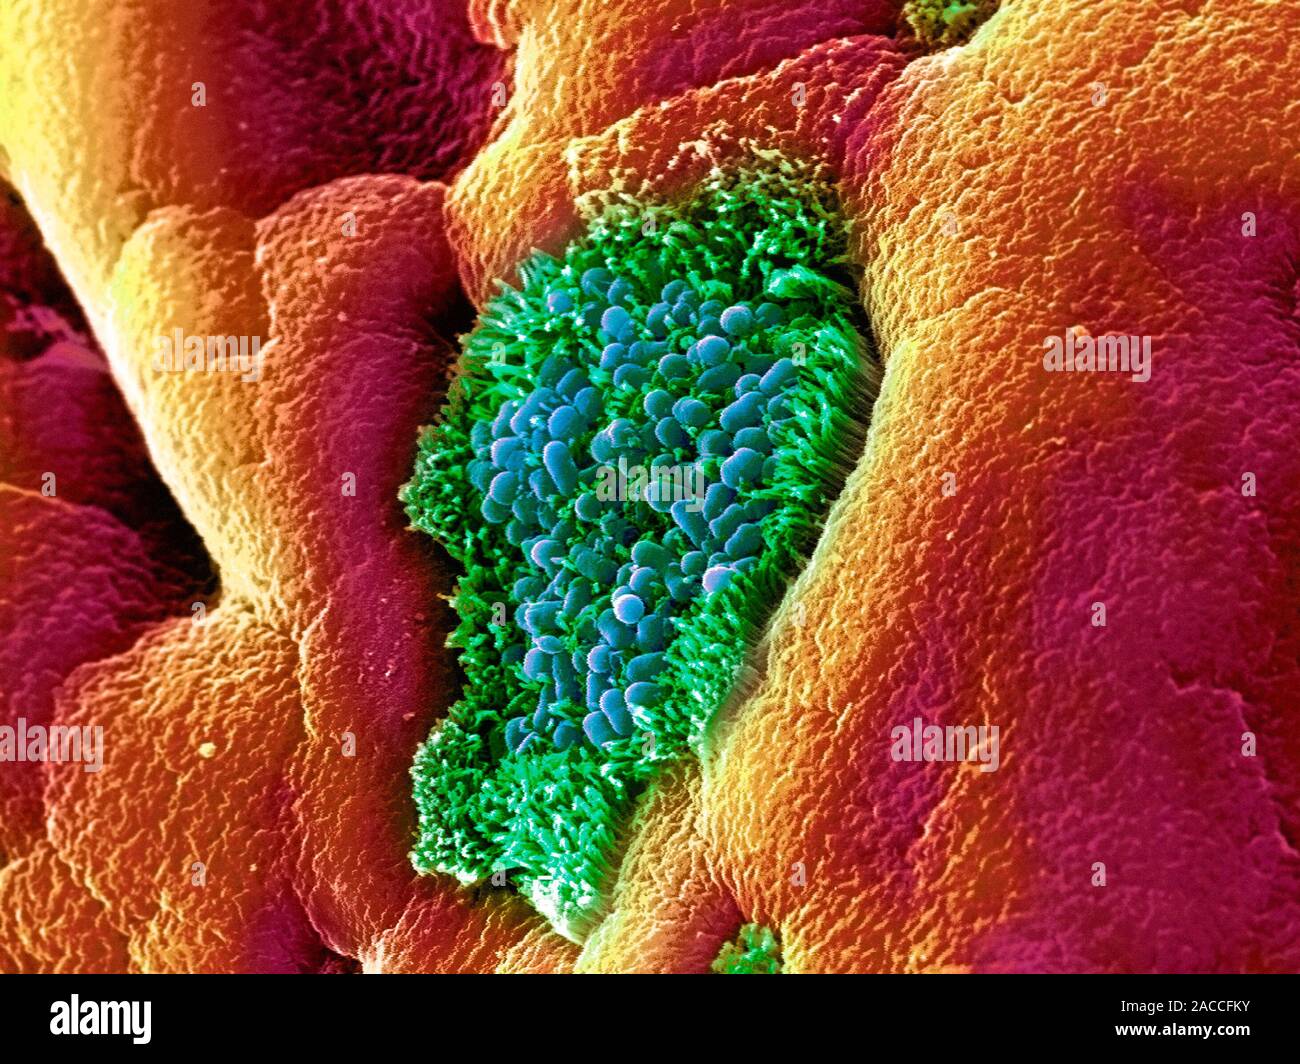 E. coli bacteria. Coloured scanning electron micrograph (SEM) of ...